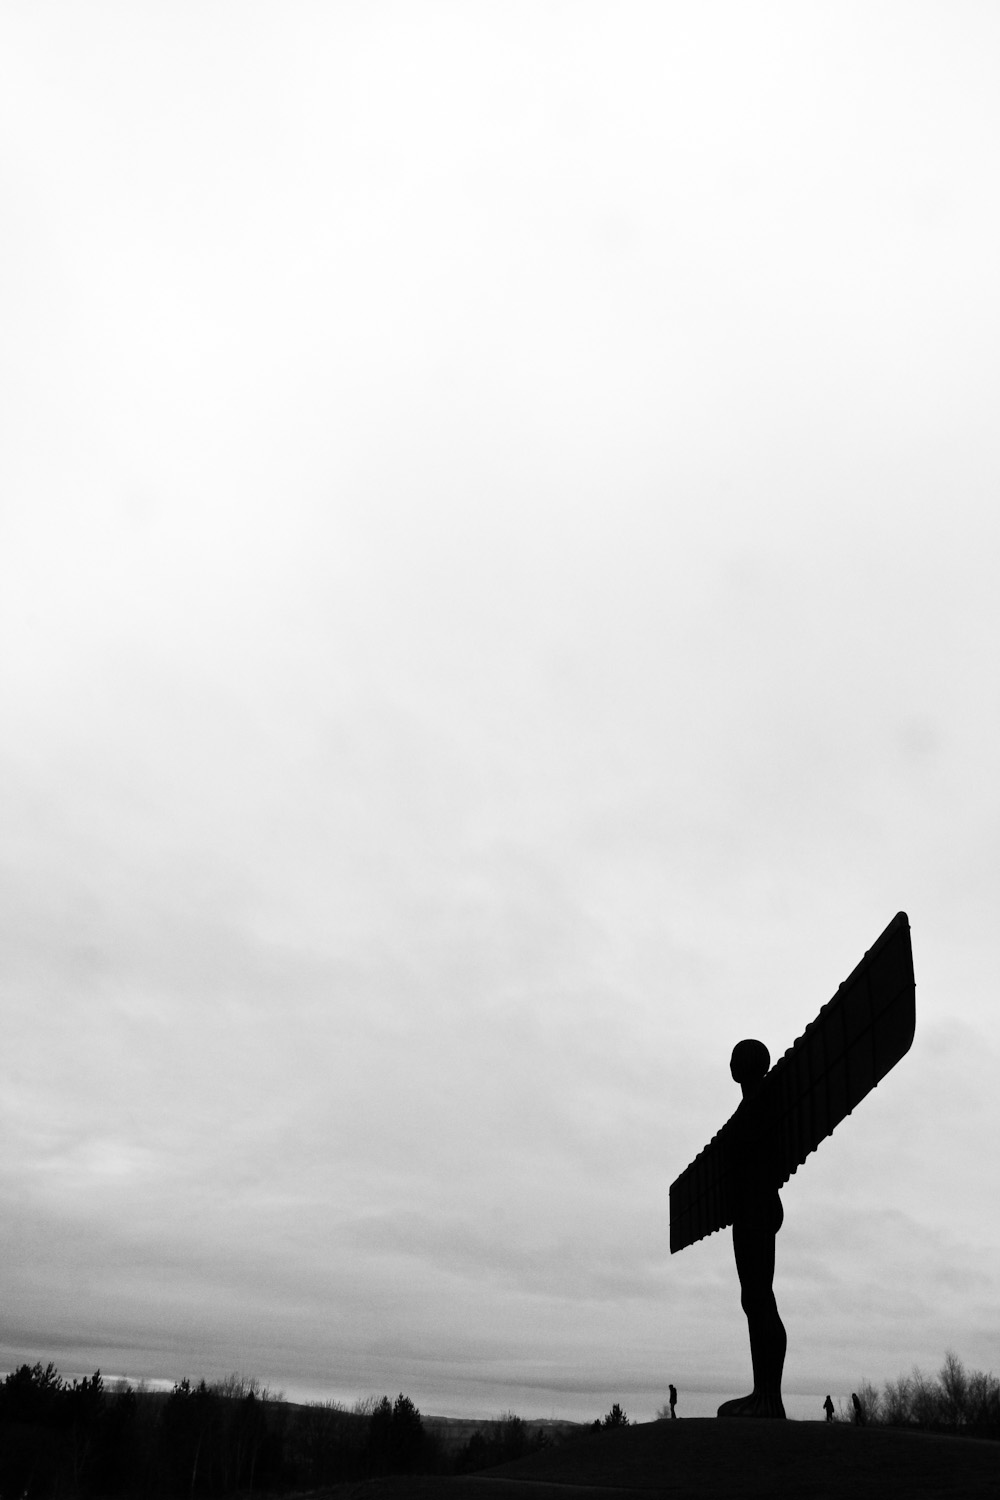 Angel of the North, Antony Gromley, Gateshead